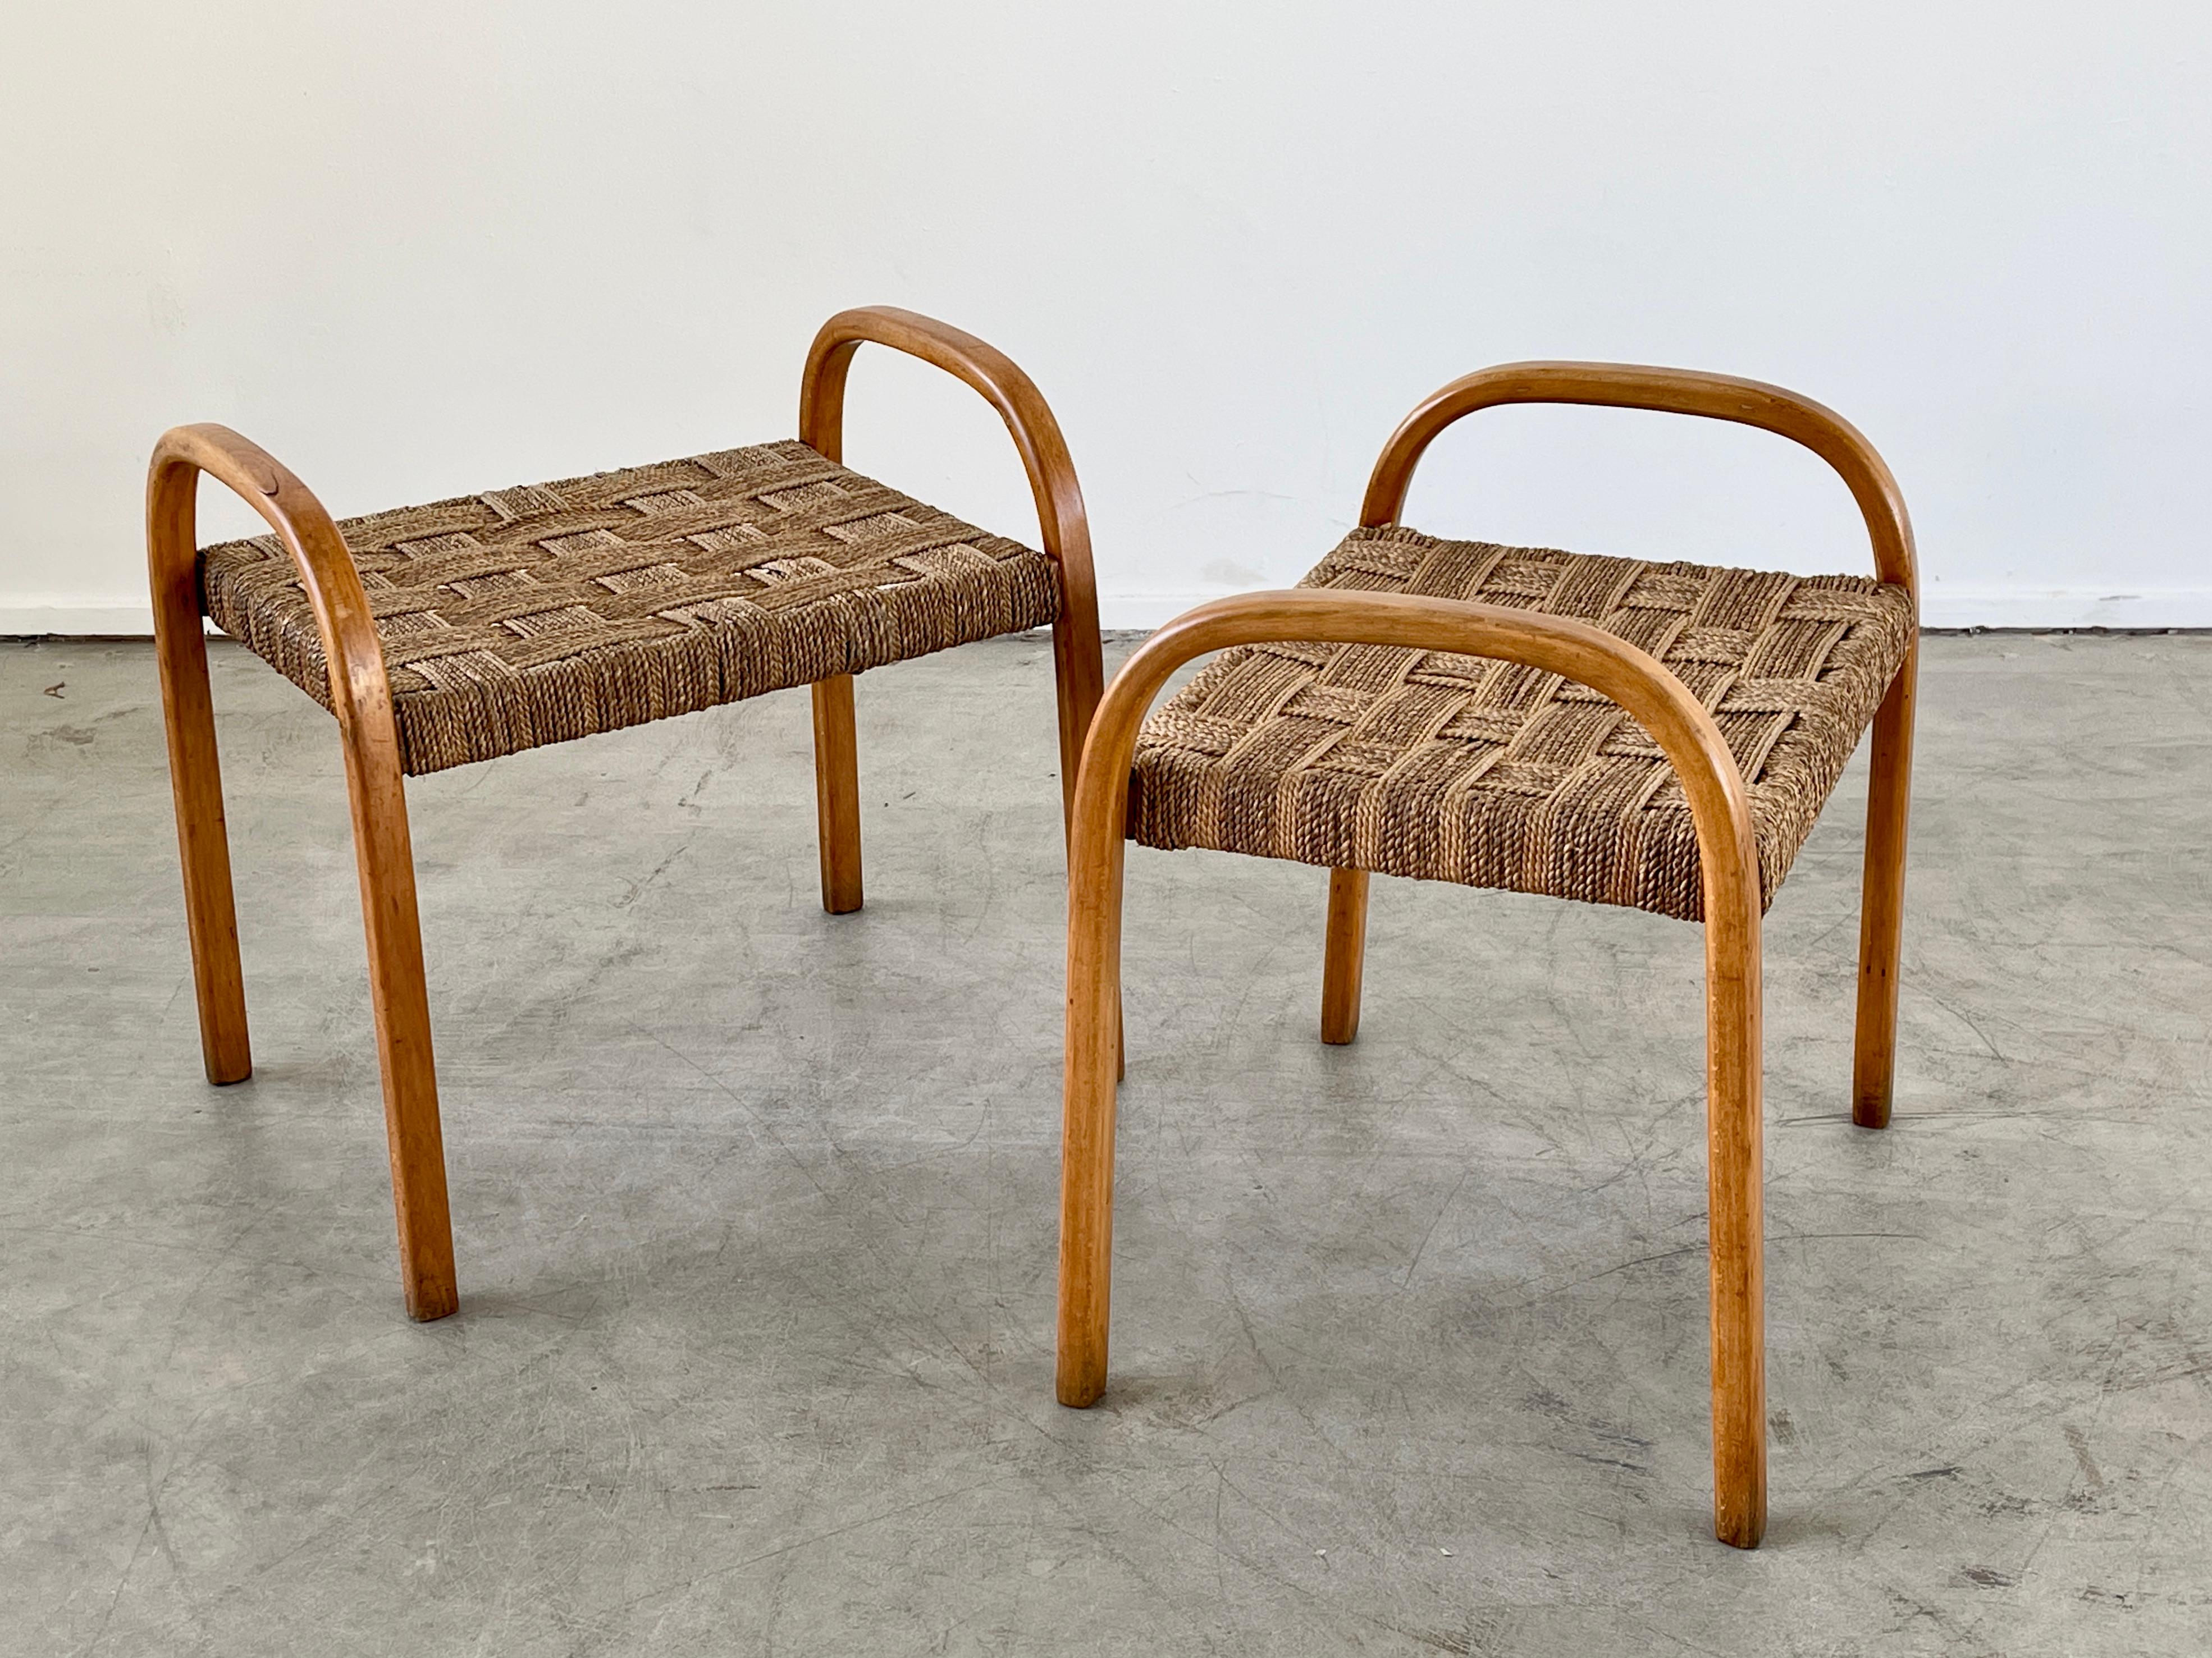 1940's pair of bentwood stools with original woven hemp seats.
Italy - 1940's.